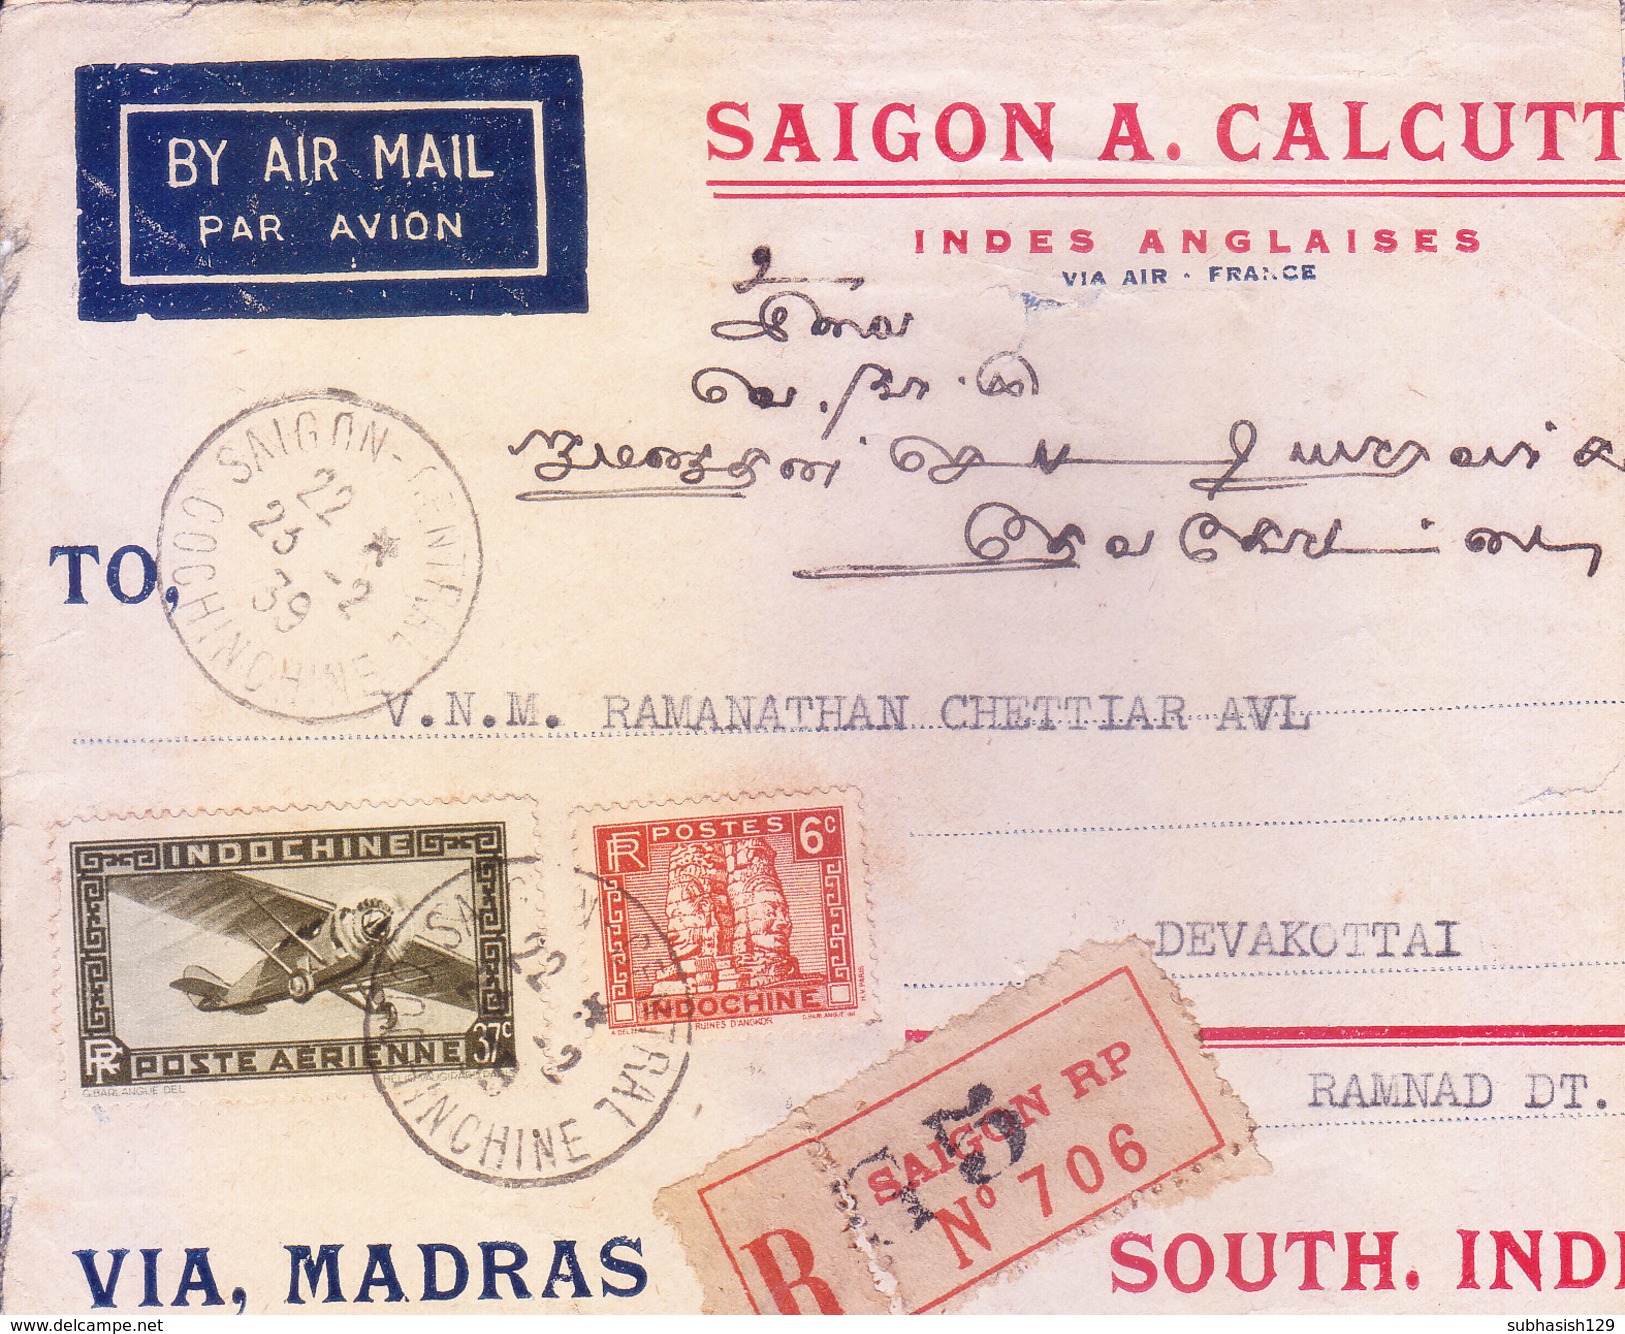 INDOCHINE 1938 AIRMAIL REGD. COVER, SAIGON TO SOUTH INDIA VIA MADRAS, UPTO TO CALCUTTA VIA AIR FRANCE - TORN CONDITION - Luchtpost